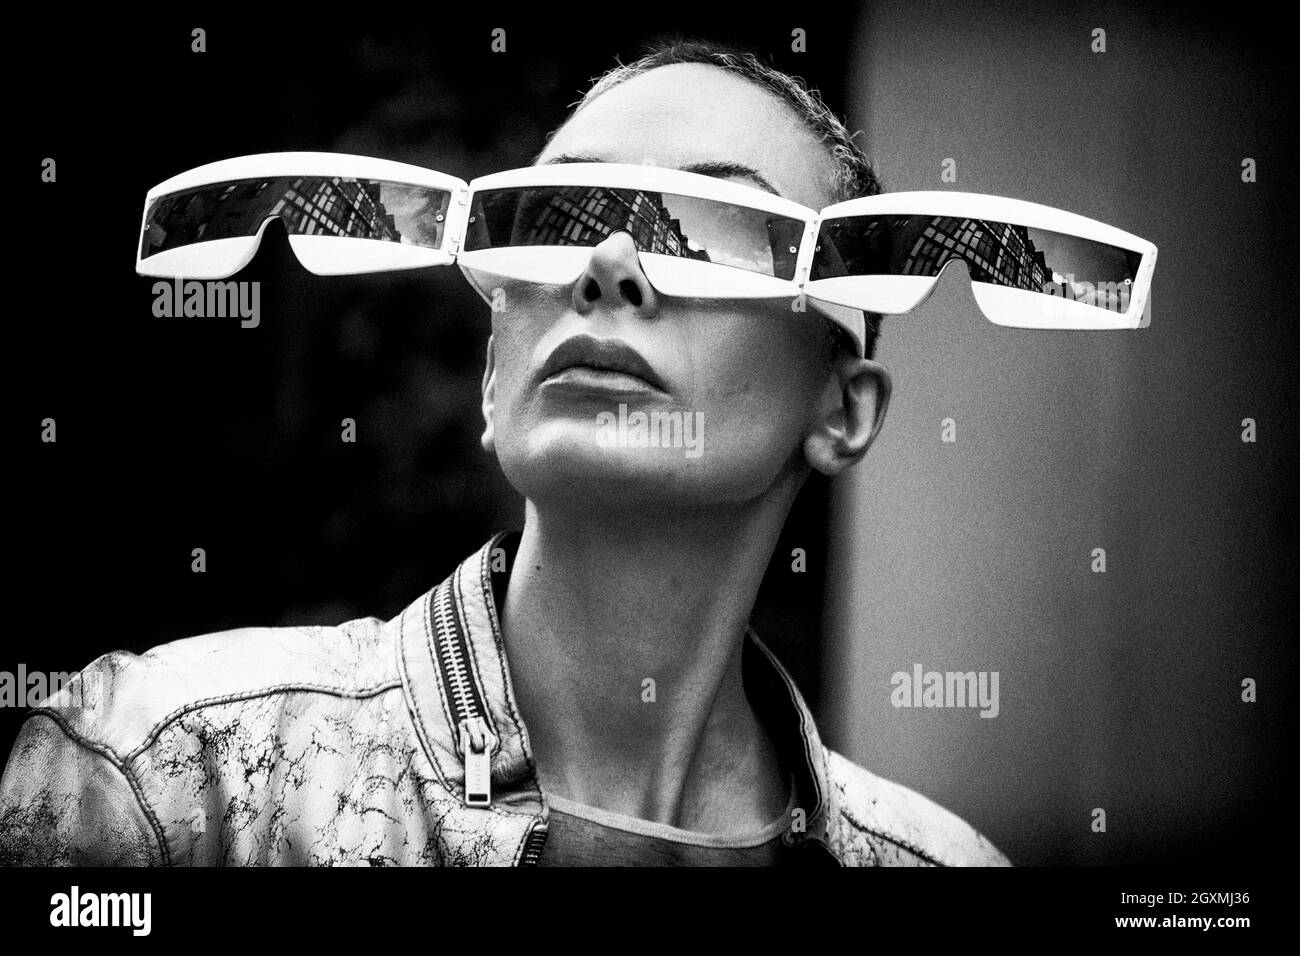 London black and white street photography: Woman with elaborate eyewear on anti-fashion demo. Stock Photo